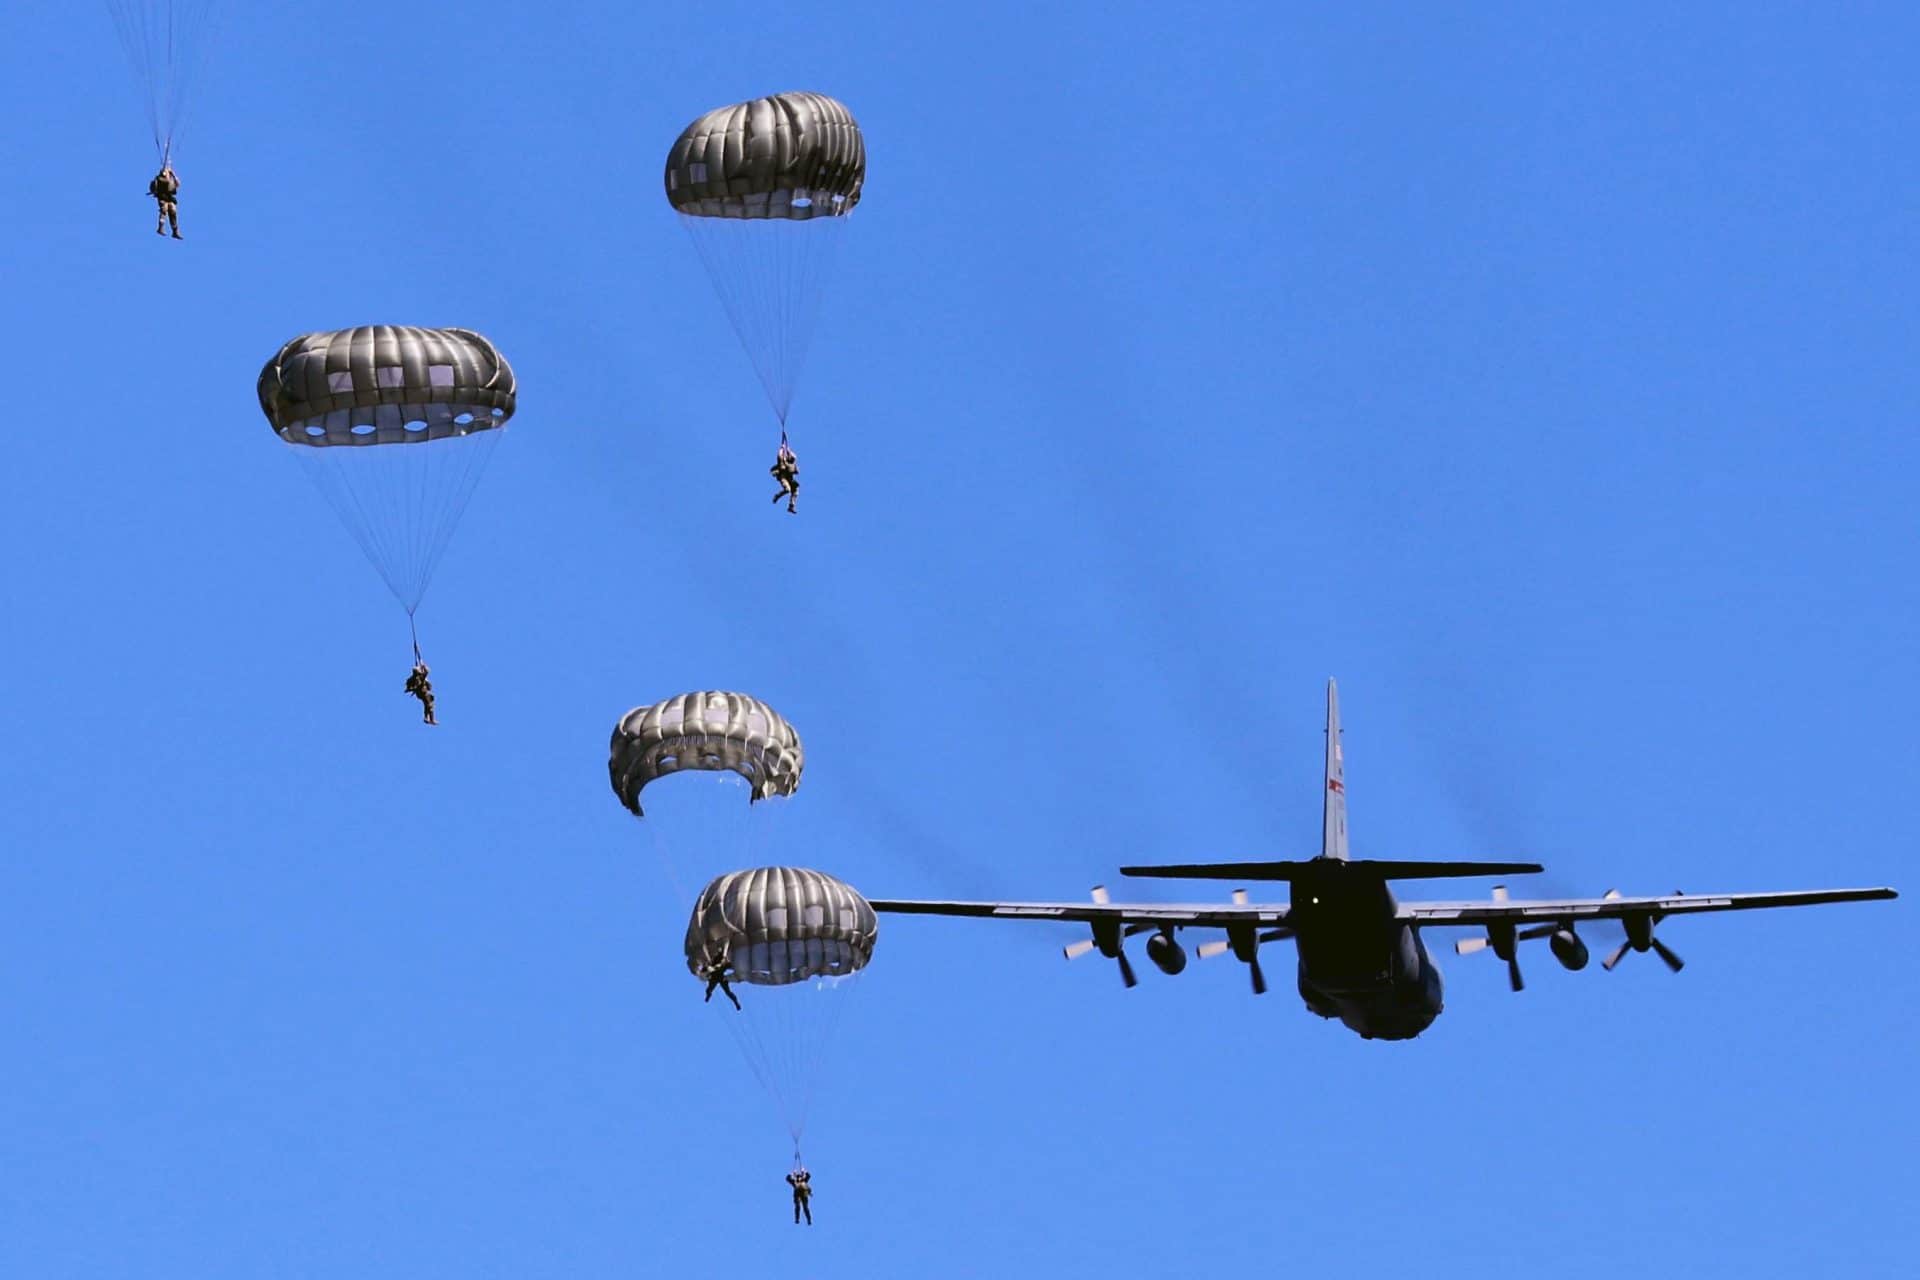 https://thebulletin.org/wp-content/uploads/2021/09/parachute-exercise-150x150.jpg